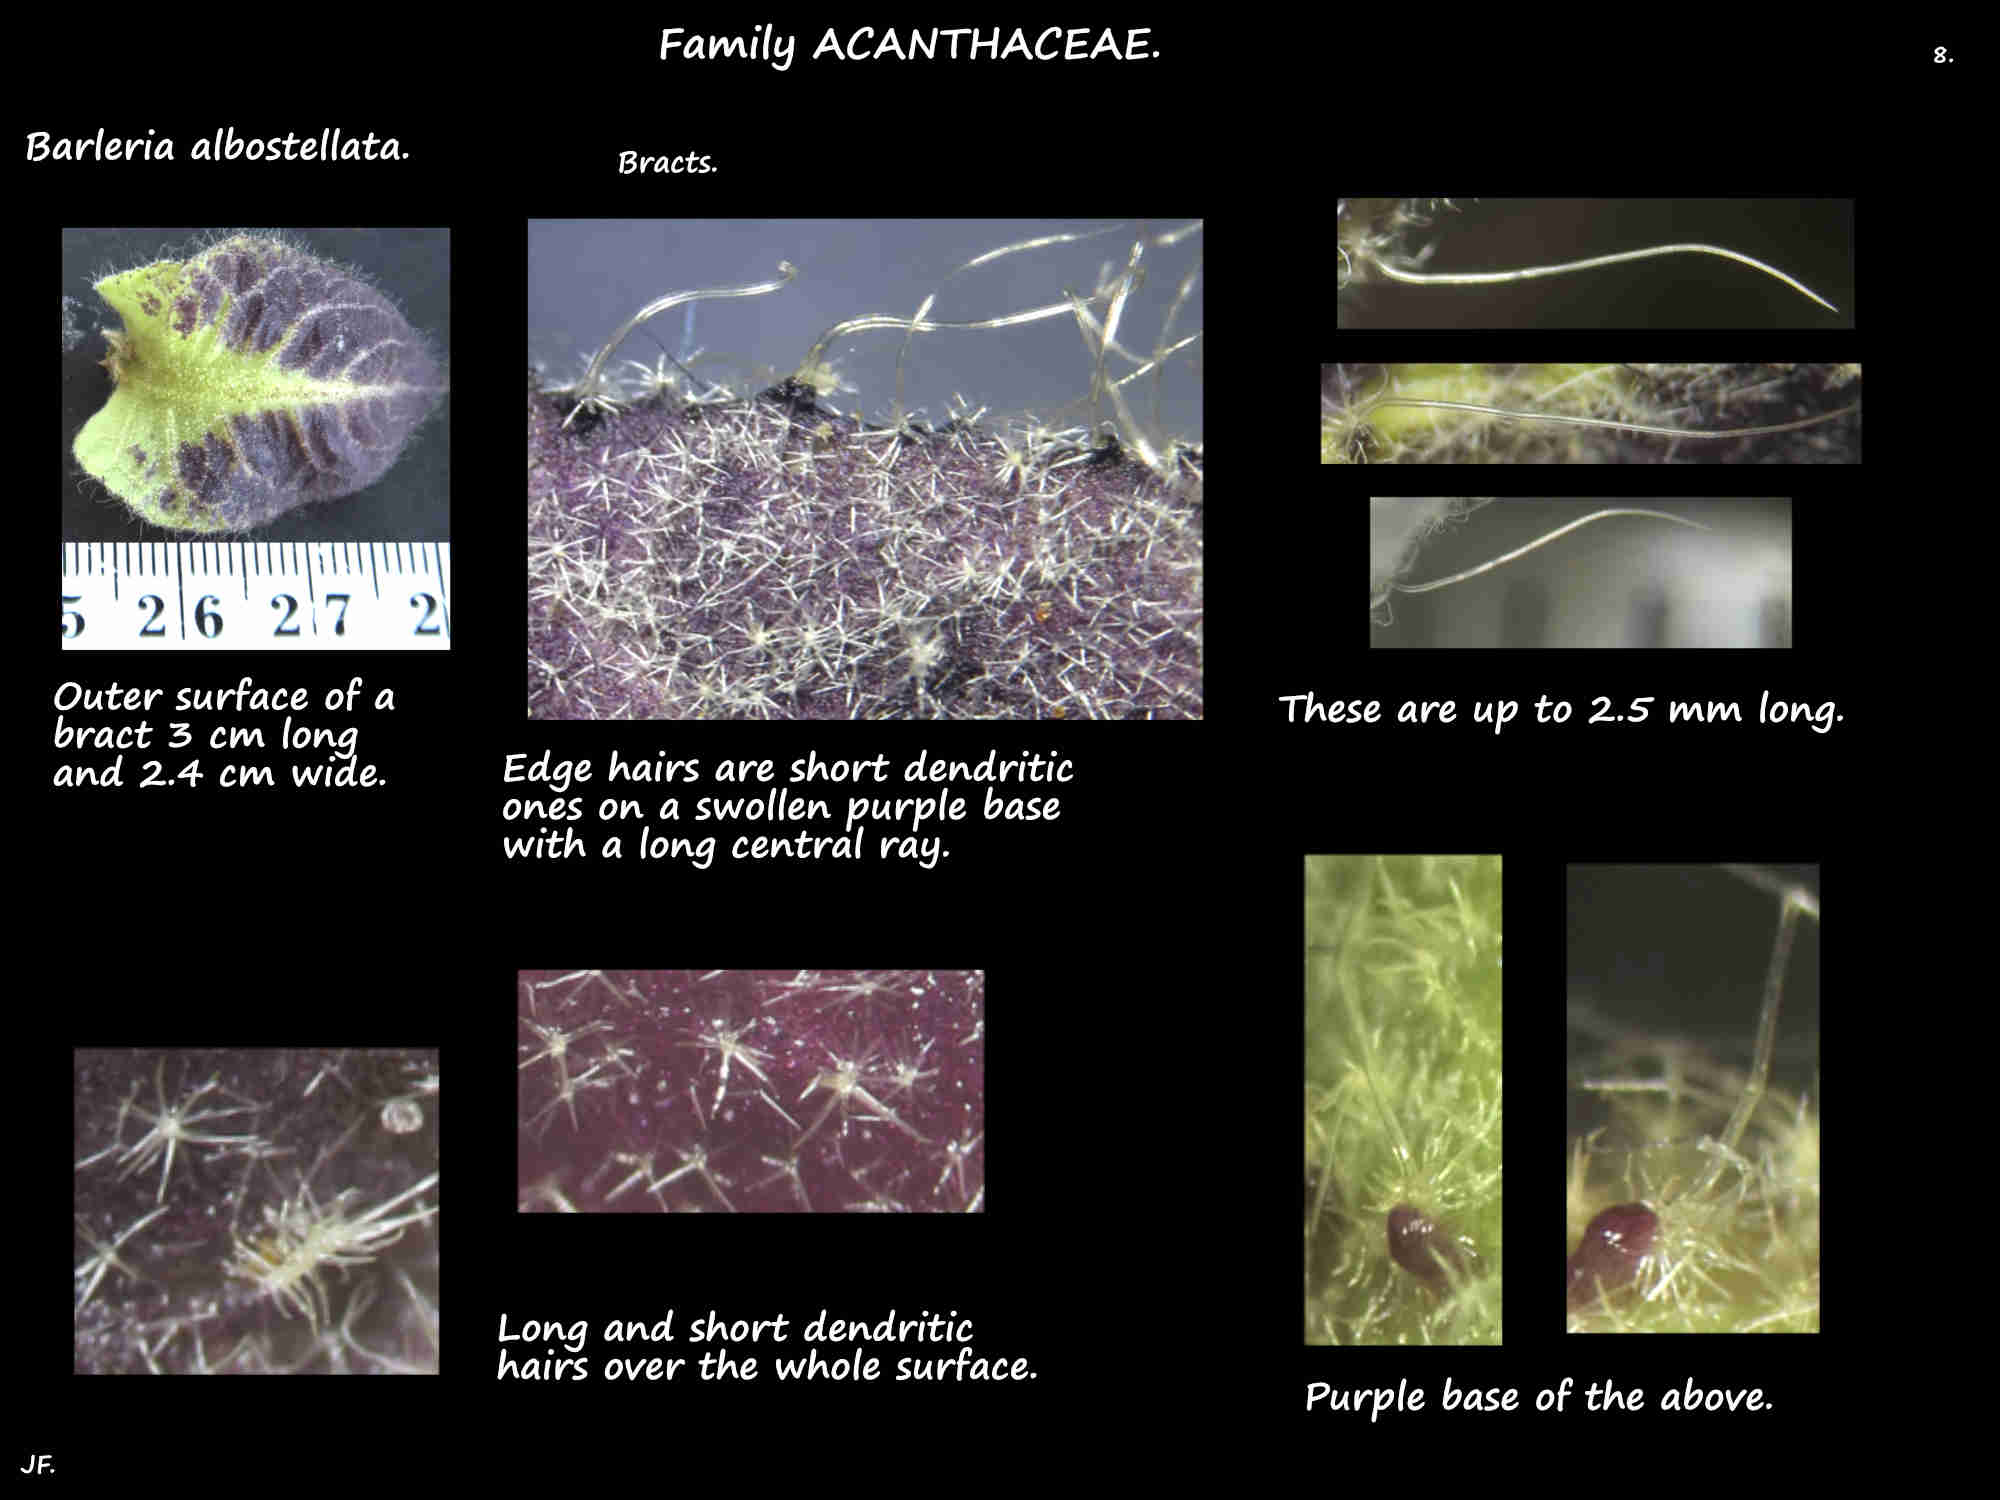 8 Dendritic hairs on Barleria albostellata bracts